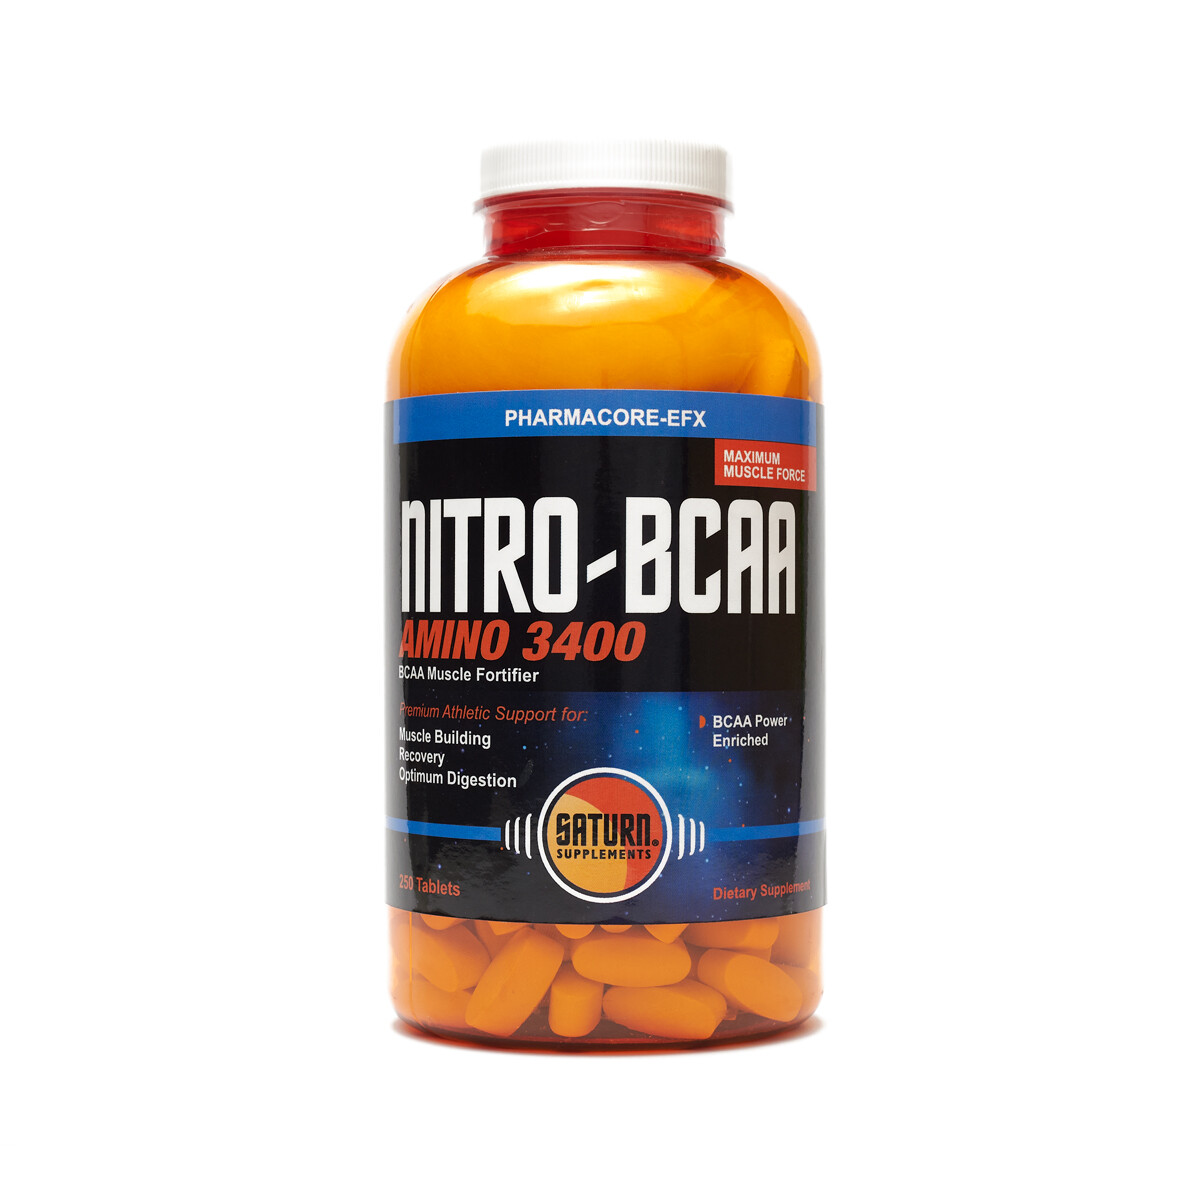 Saturn Supplements Nitro BCAA - 250 tablets 